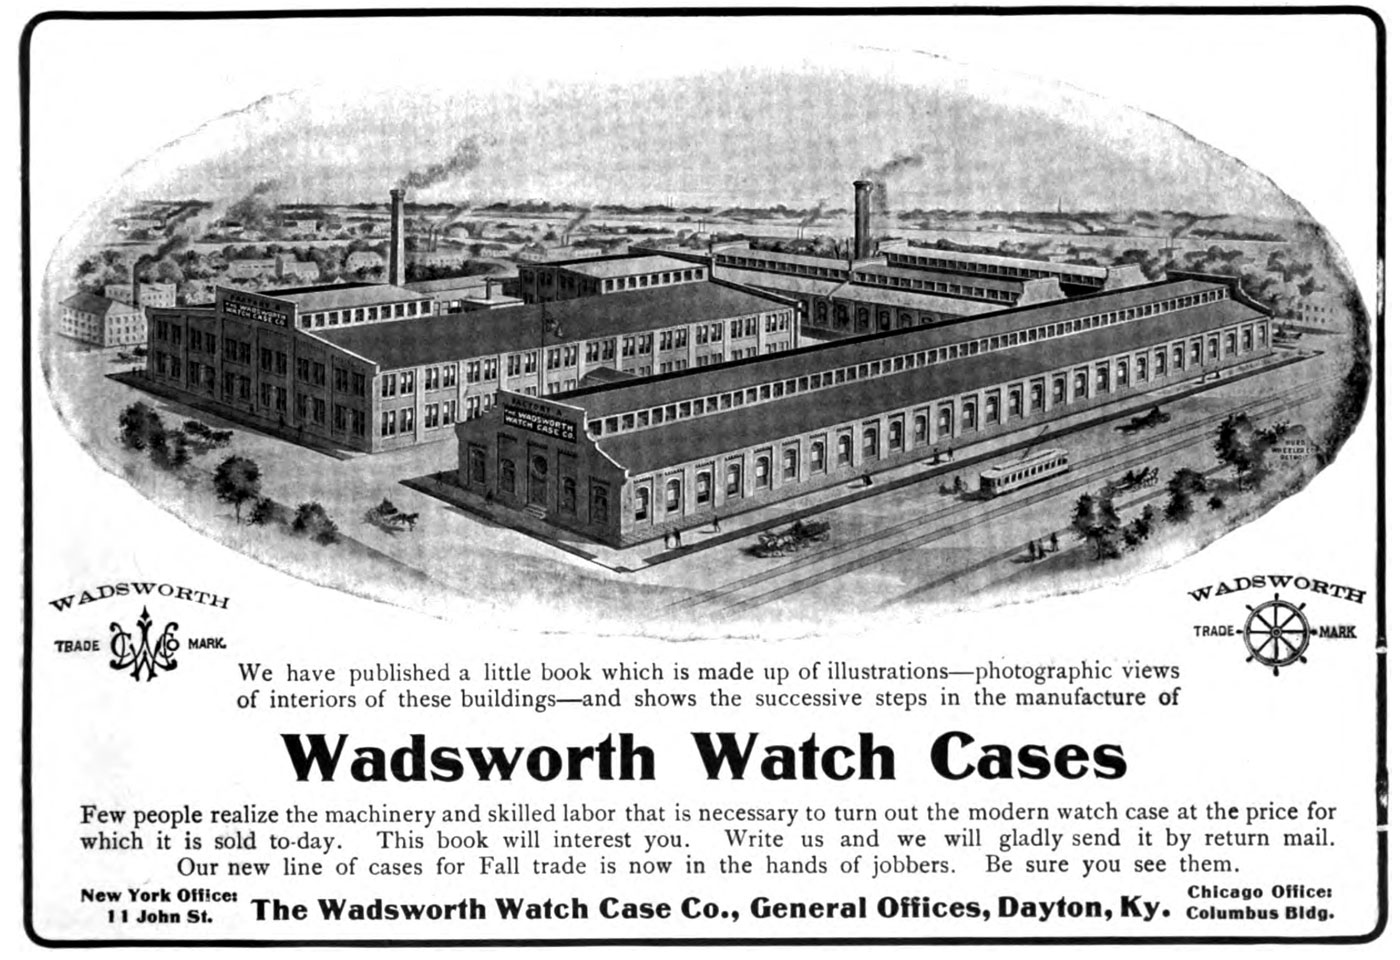 Wadsworth Watch Case Co. Image